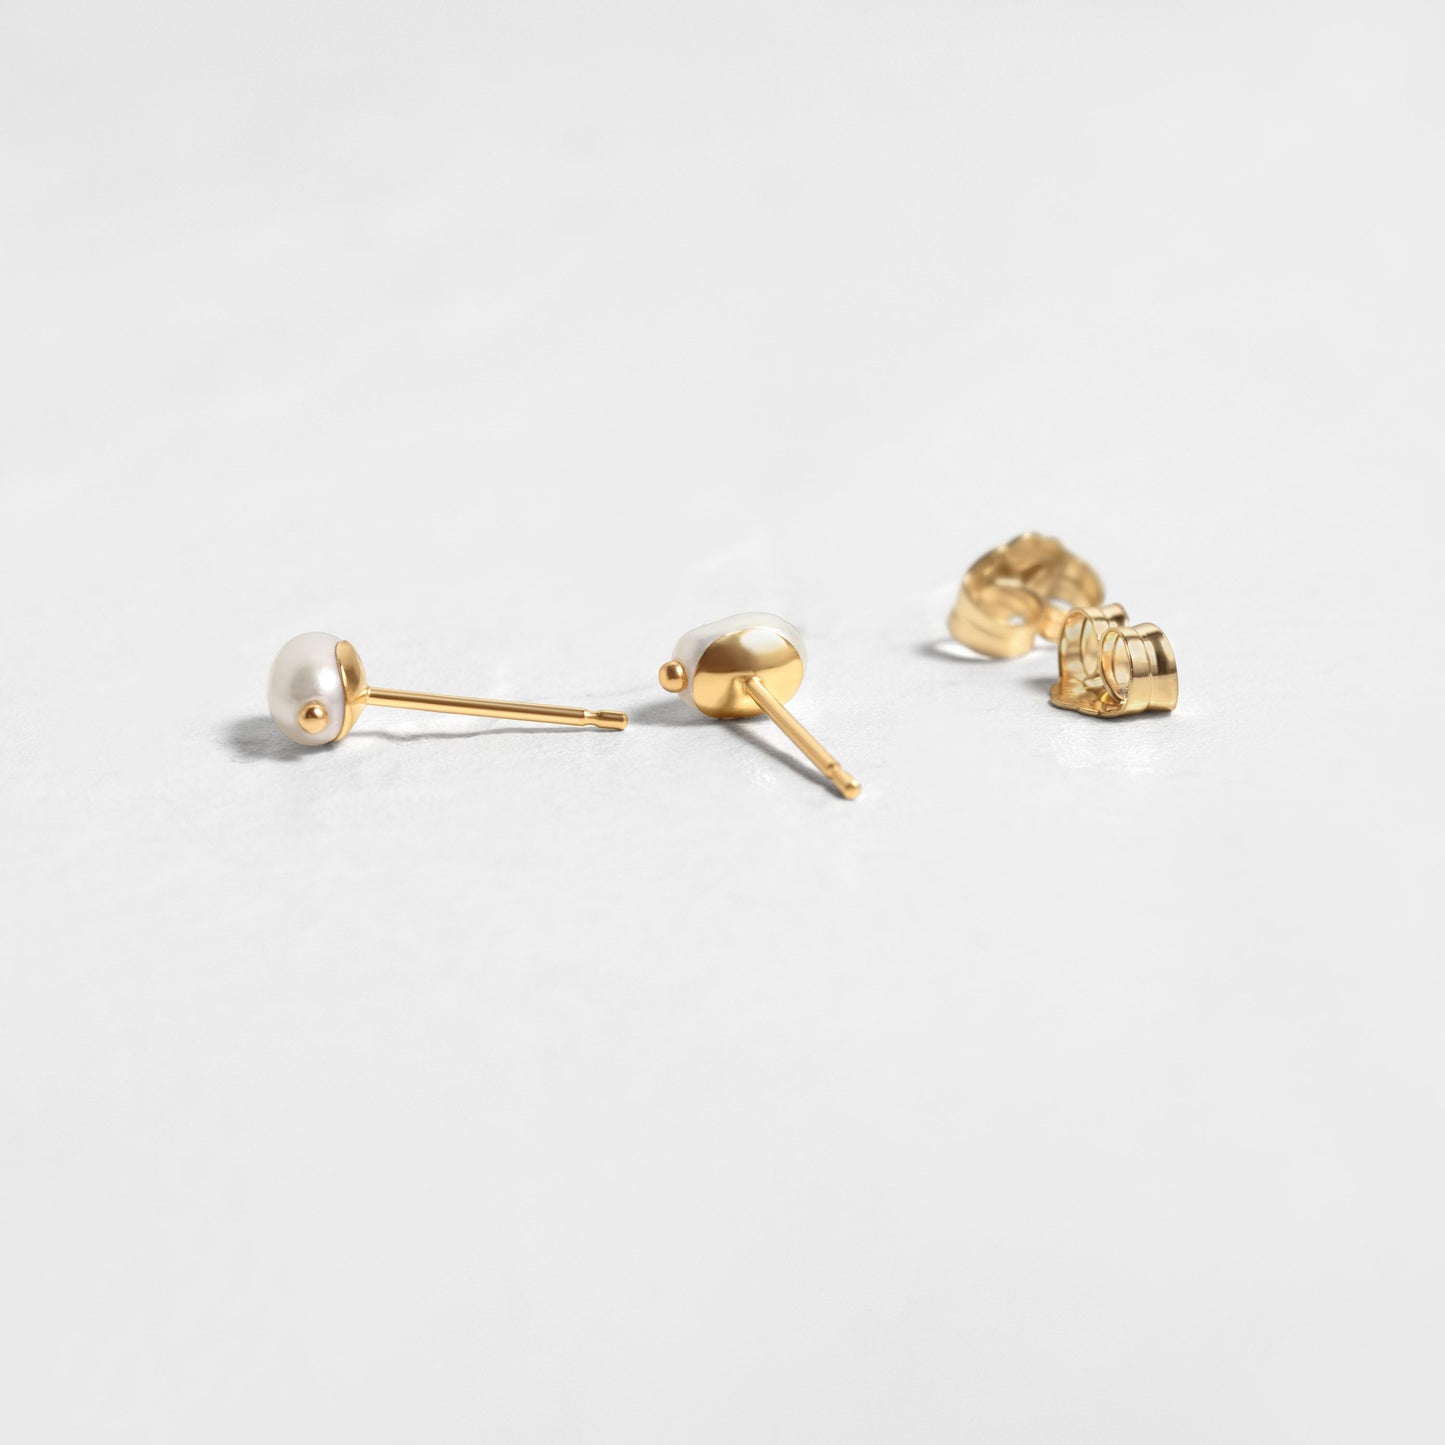 Irregular Pearl Earrings - In Stock